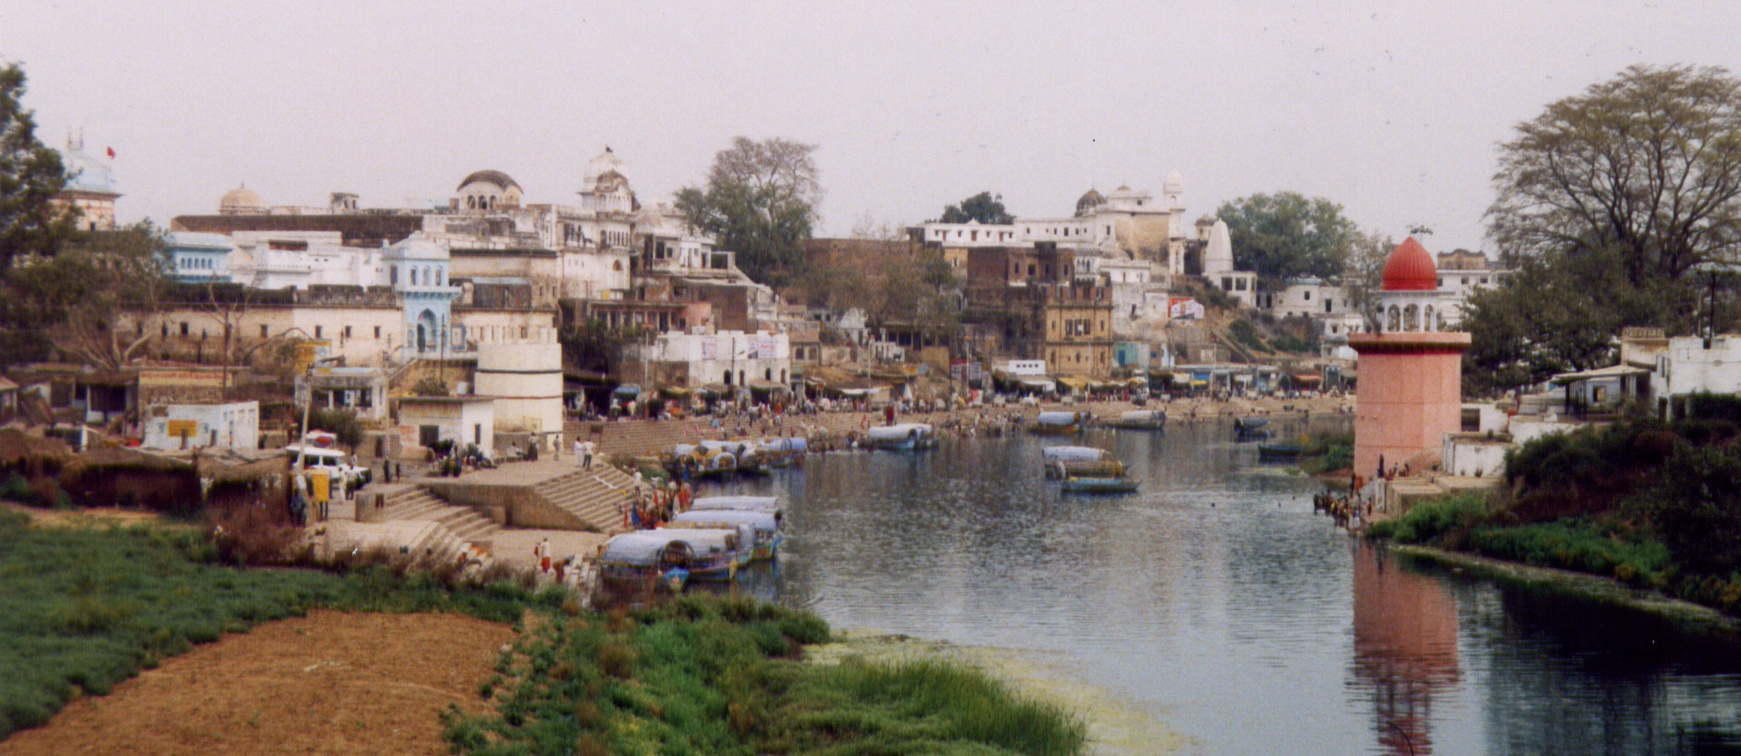 File:Chitrakoot bathing ghats on the Mandakini River INDIA.jpg - Wikimedia Commons